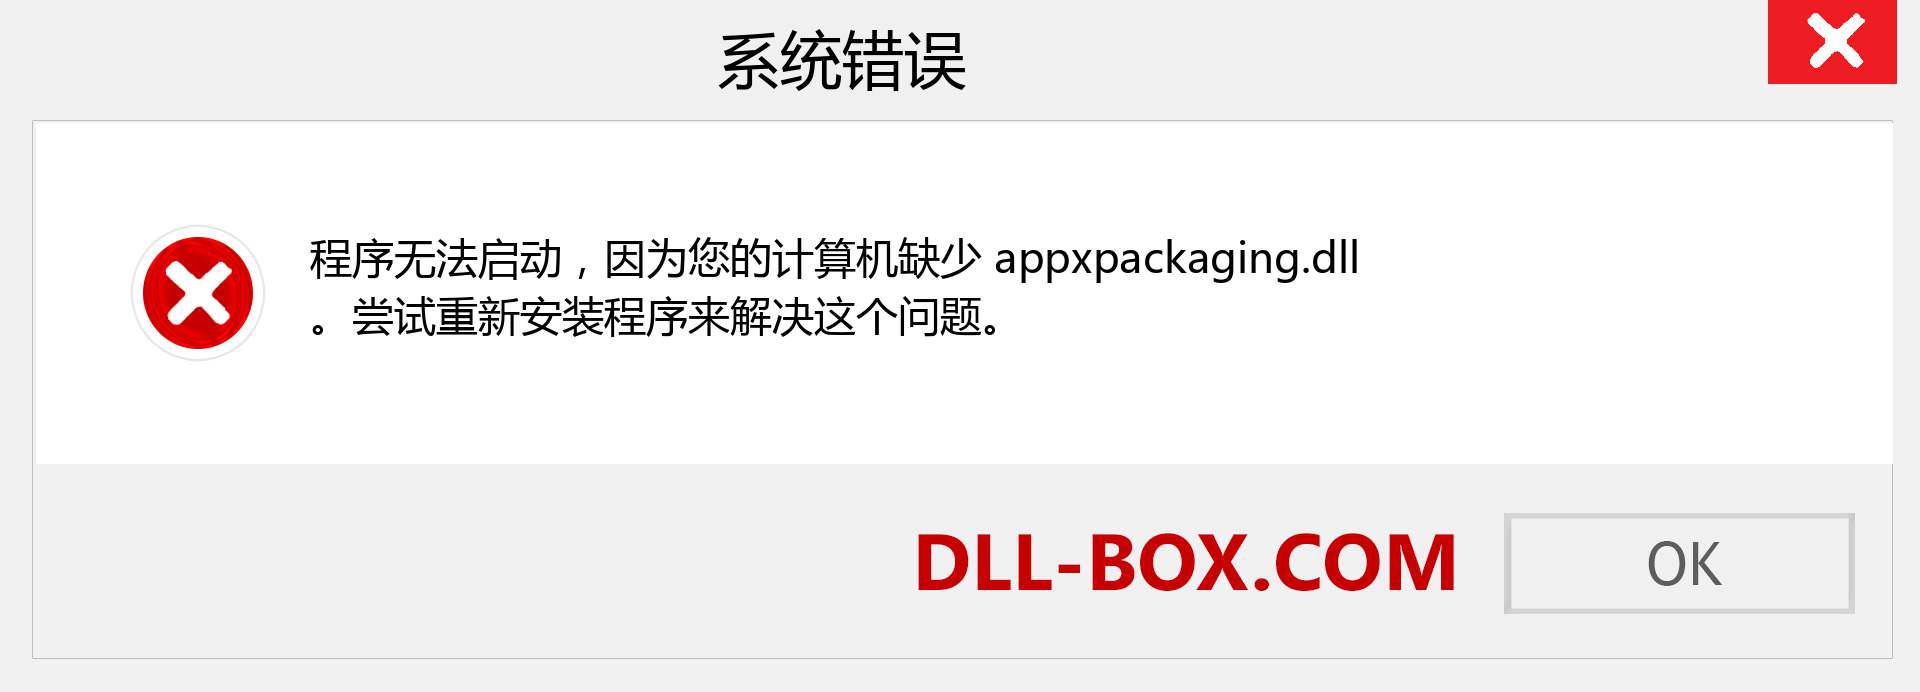 appxpackaging.dll 文件丢失？。 适用于 Windows 7、8、10 的下载 - 修复 Windows、照片、图像上的 appxpackaging dll 丢失错误